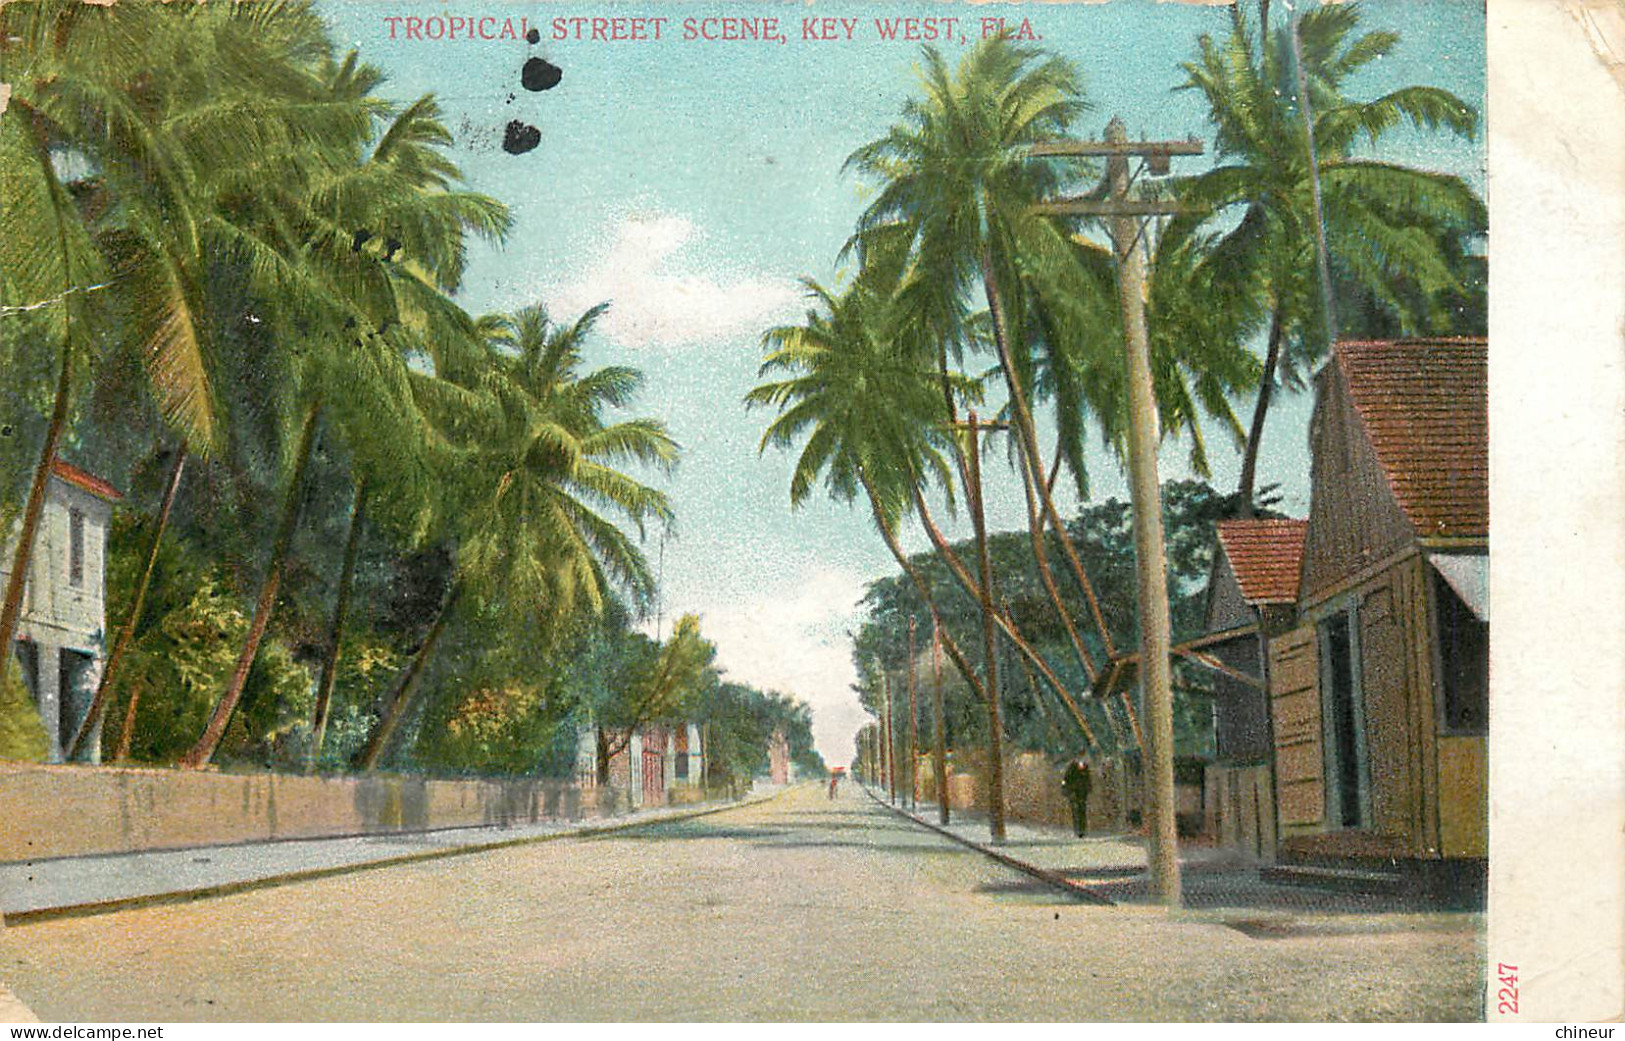 ETATS UNIS TROPICAL STREET SCENE KEY WEST FLA - Key West & The Keys